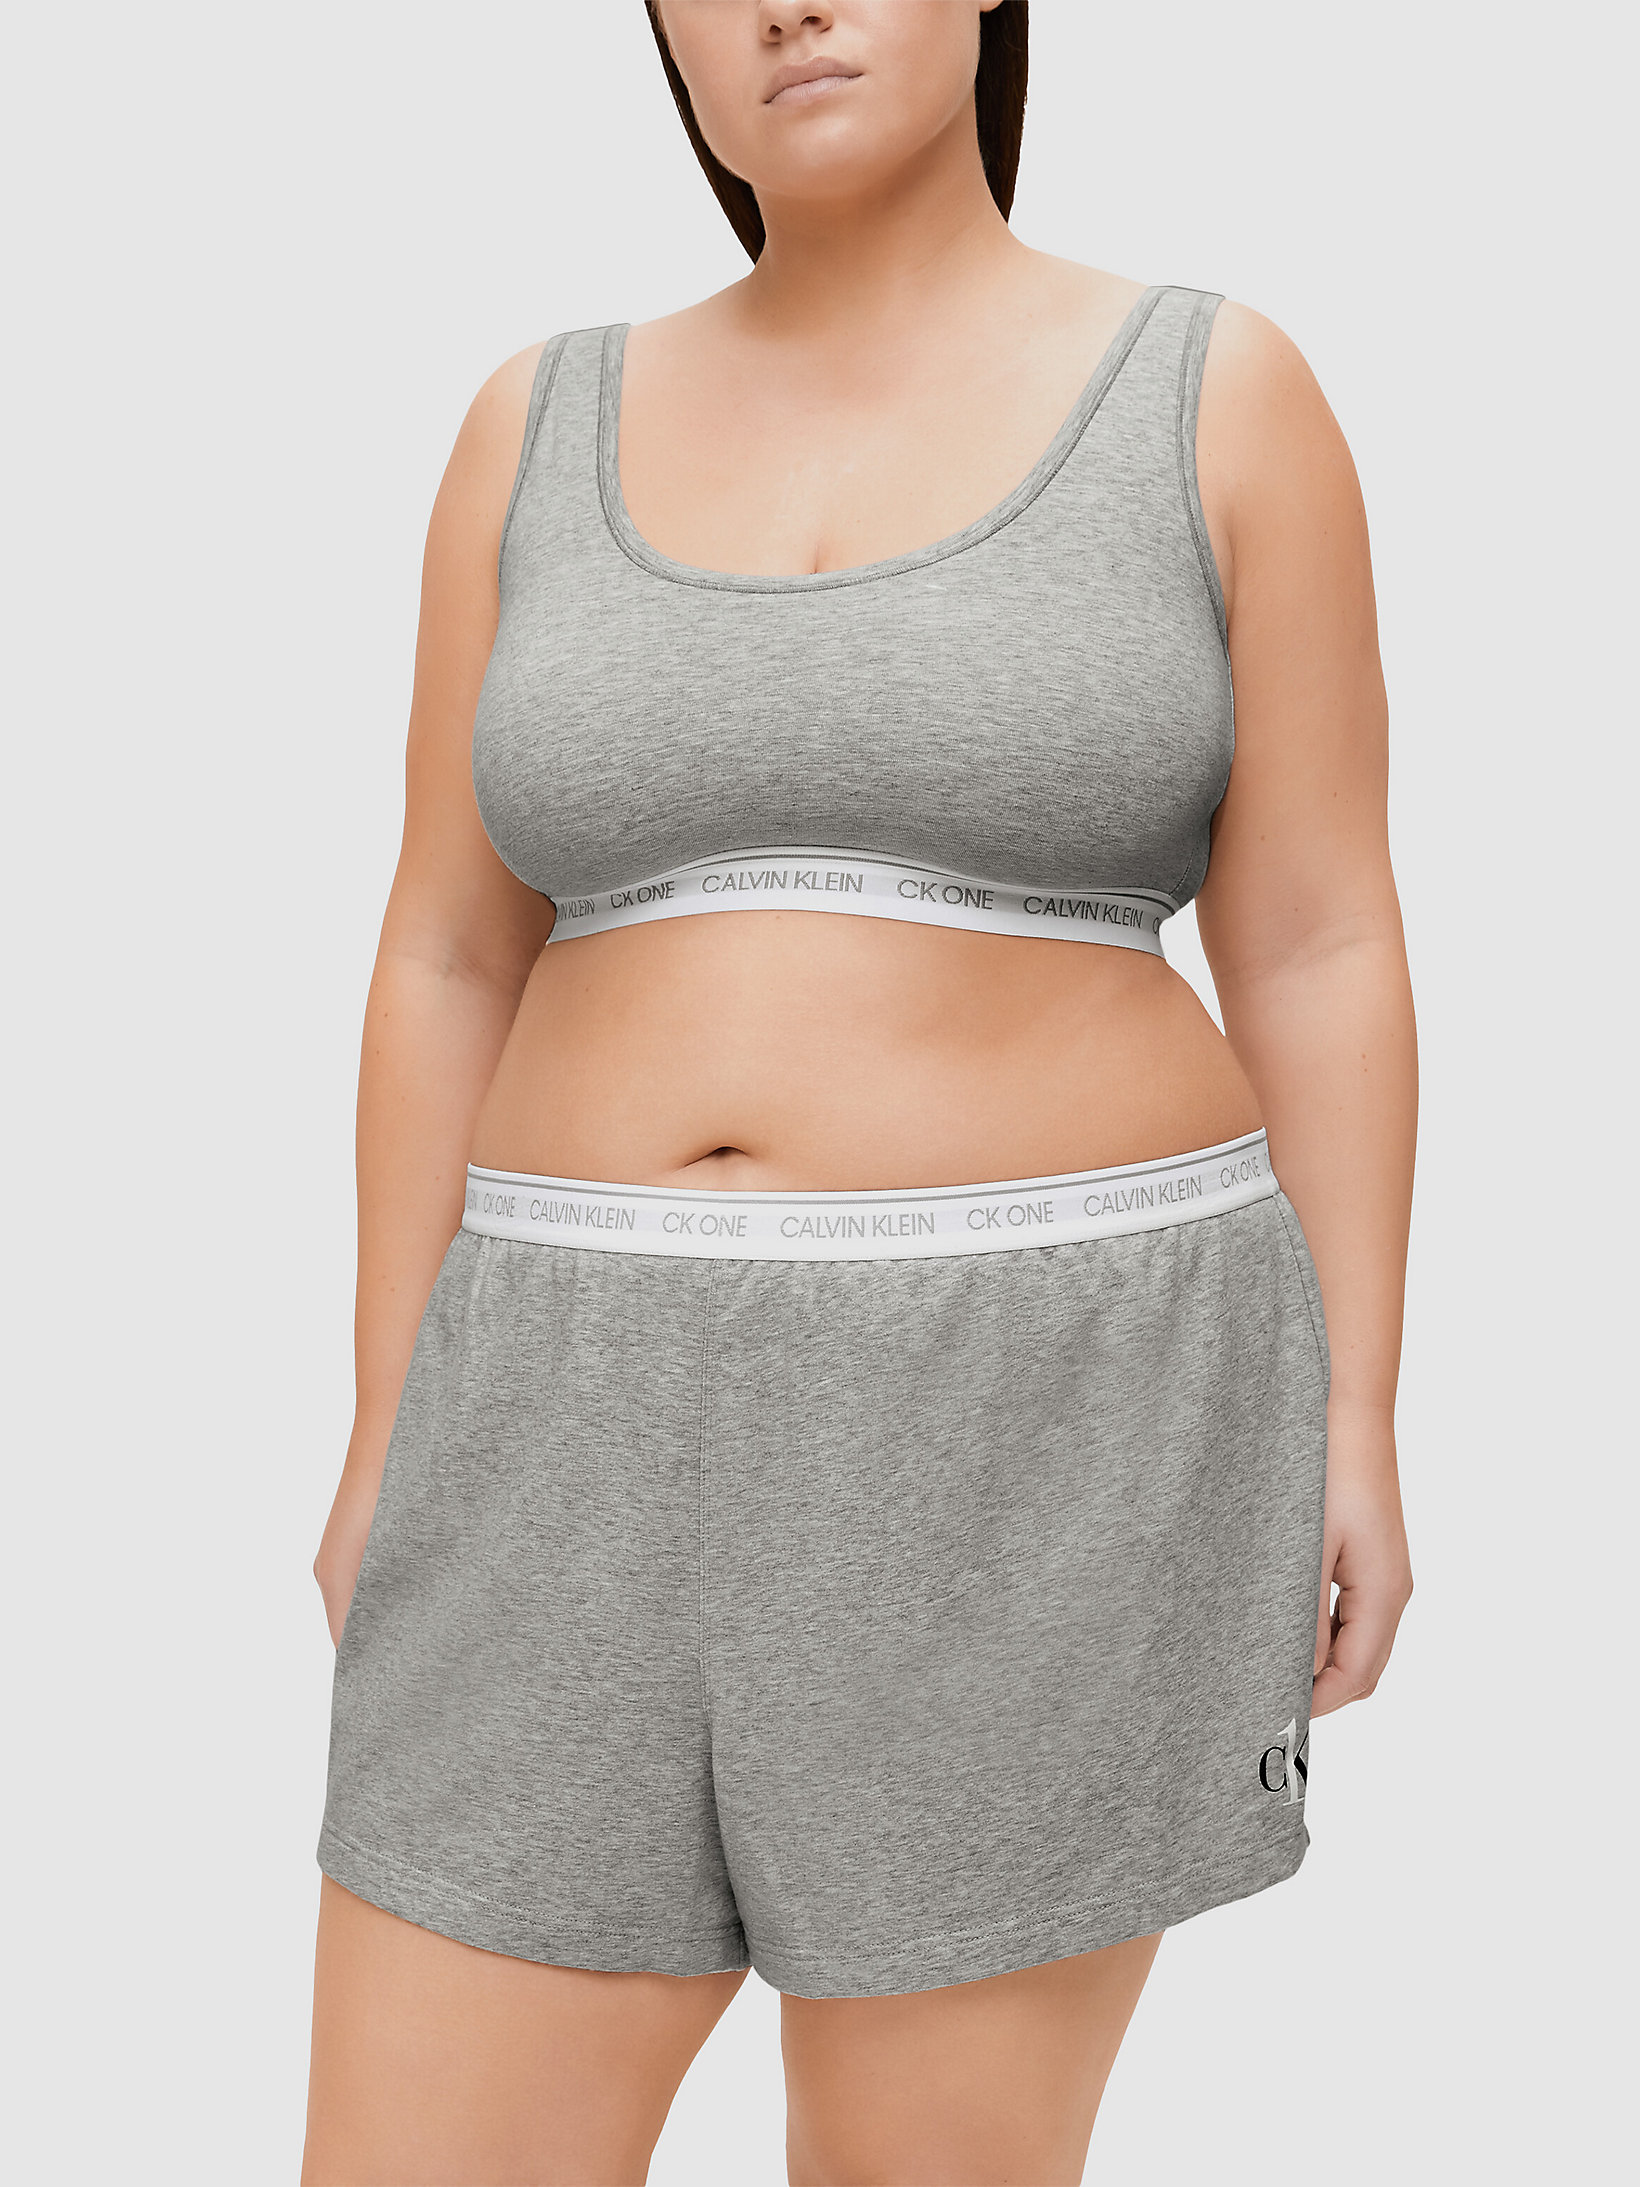 Grey Heather Plus Size Lounge Shorts - CK One undefined women Calvin Klein